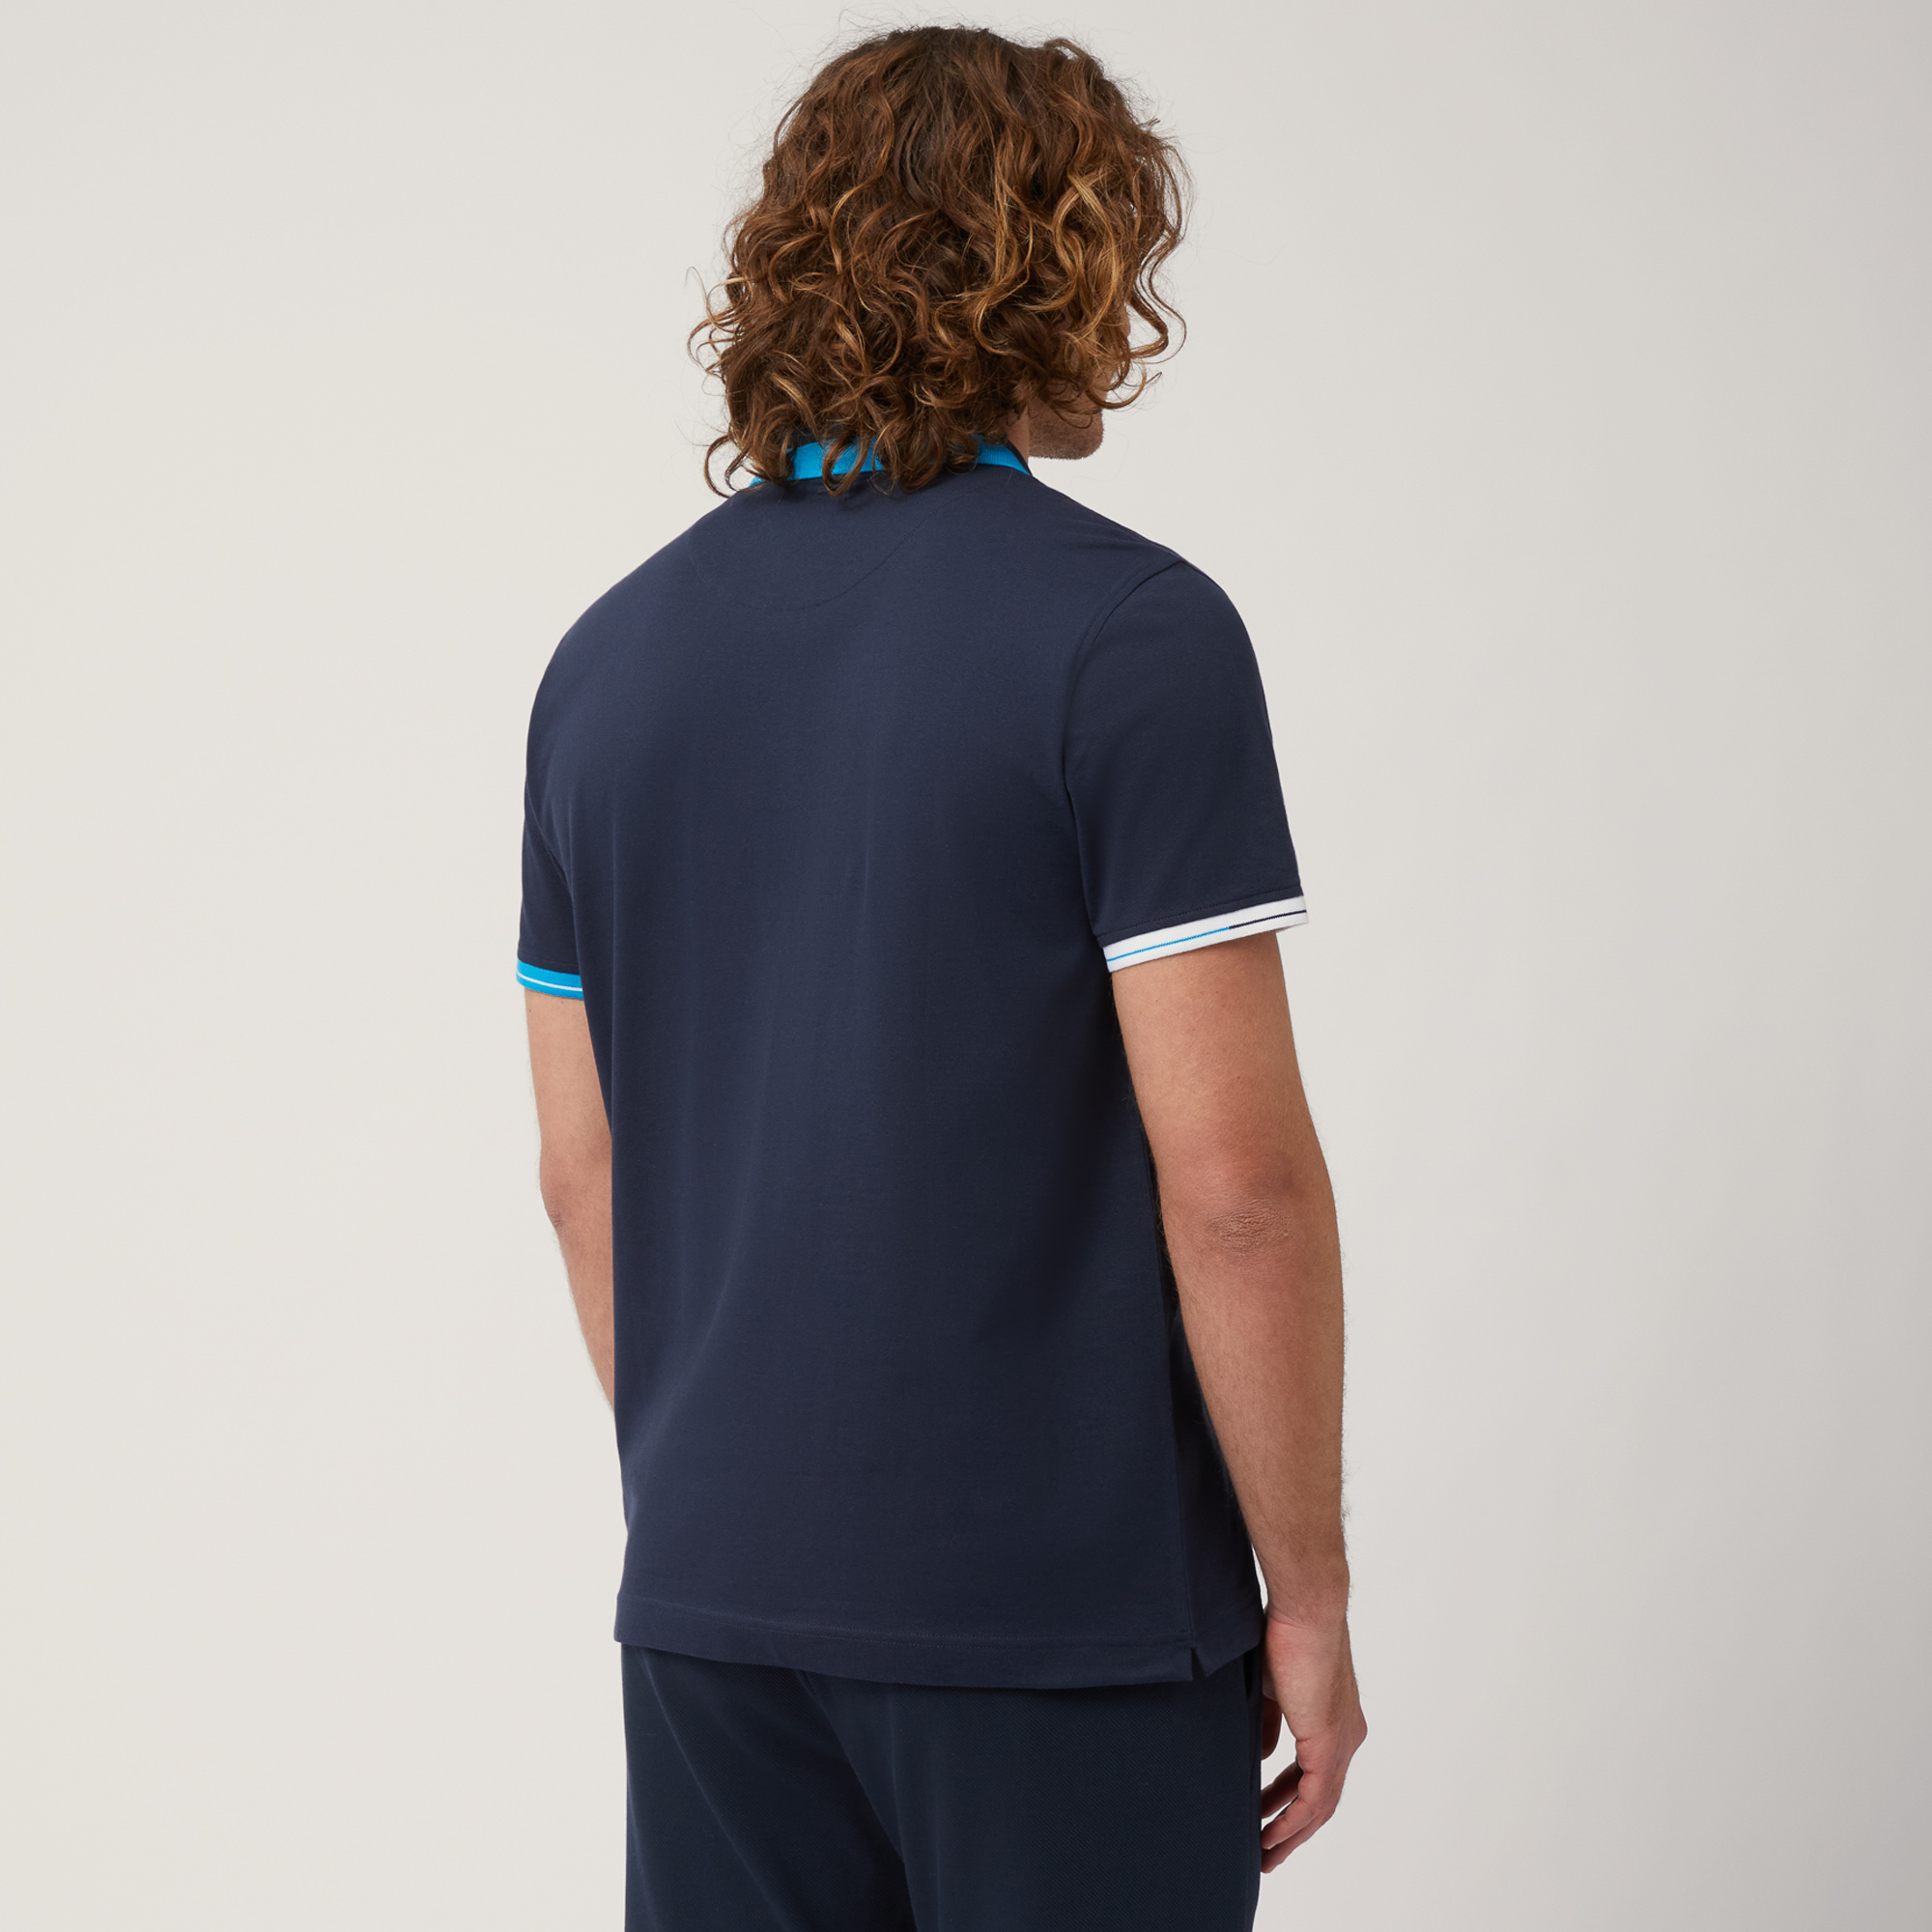 Poloshirt mit Streifen-Details, Blau, large image number 1